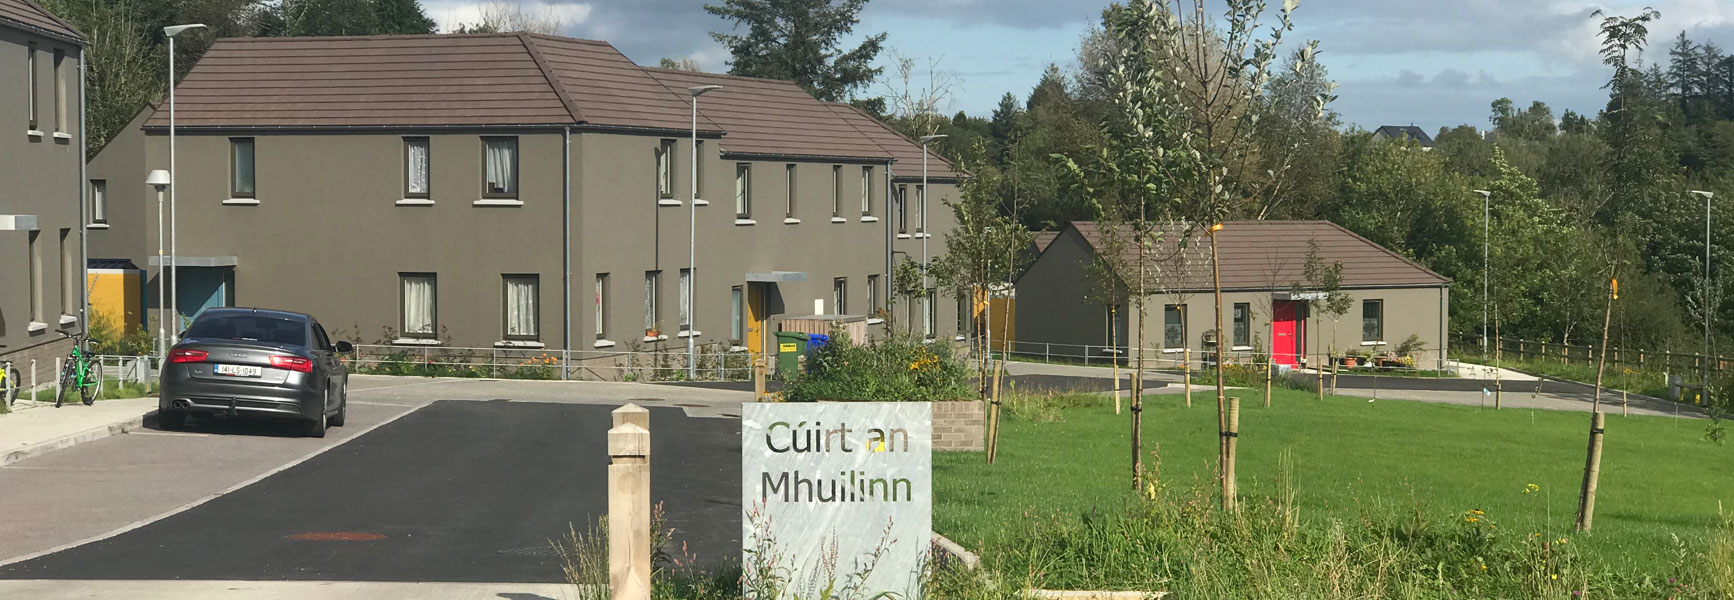 Cuirt an Mhuilinn, Feakle, Co Clare